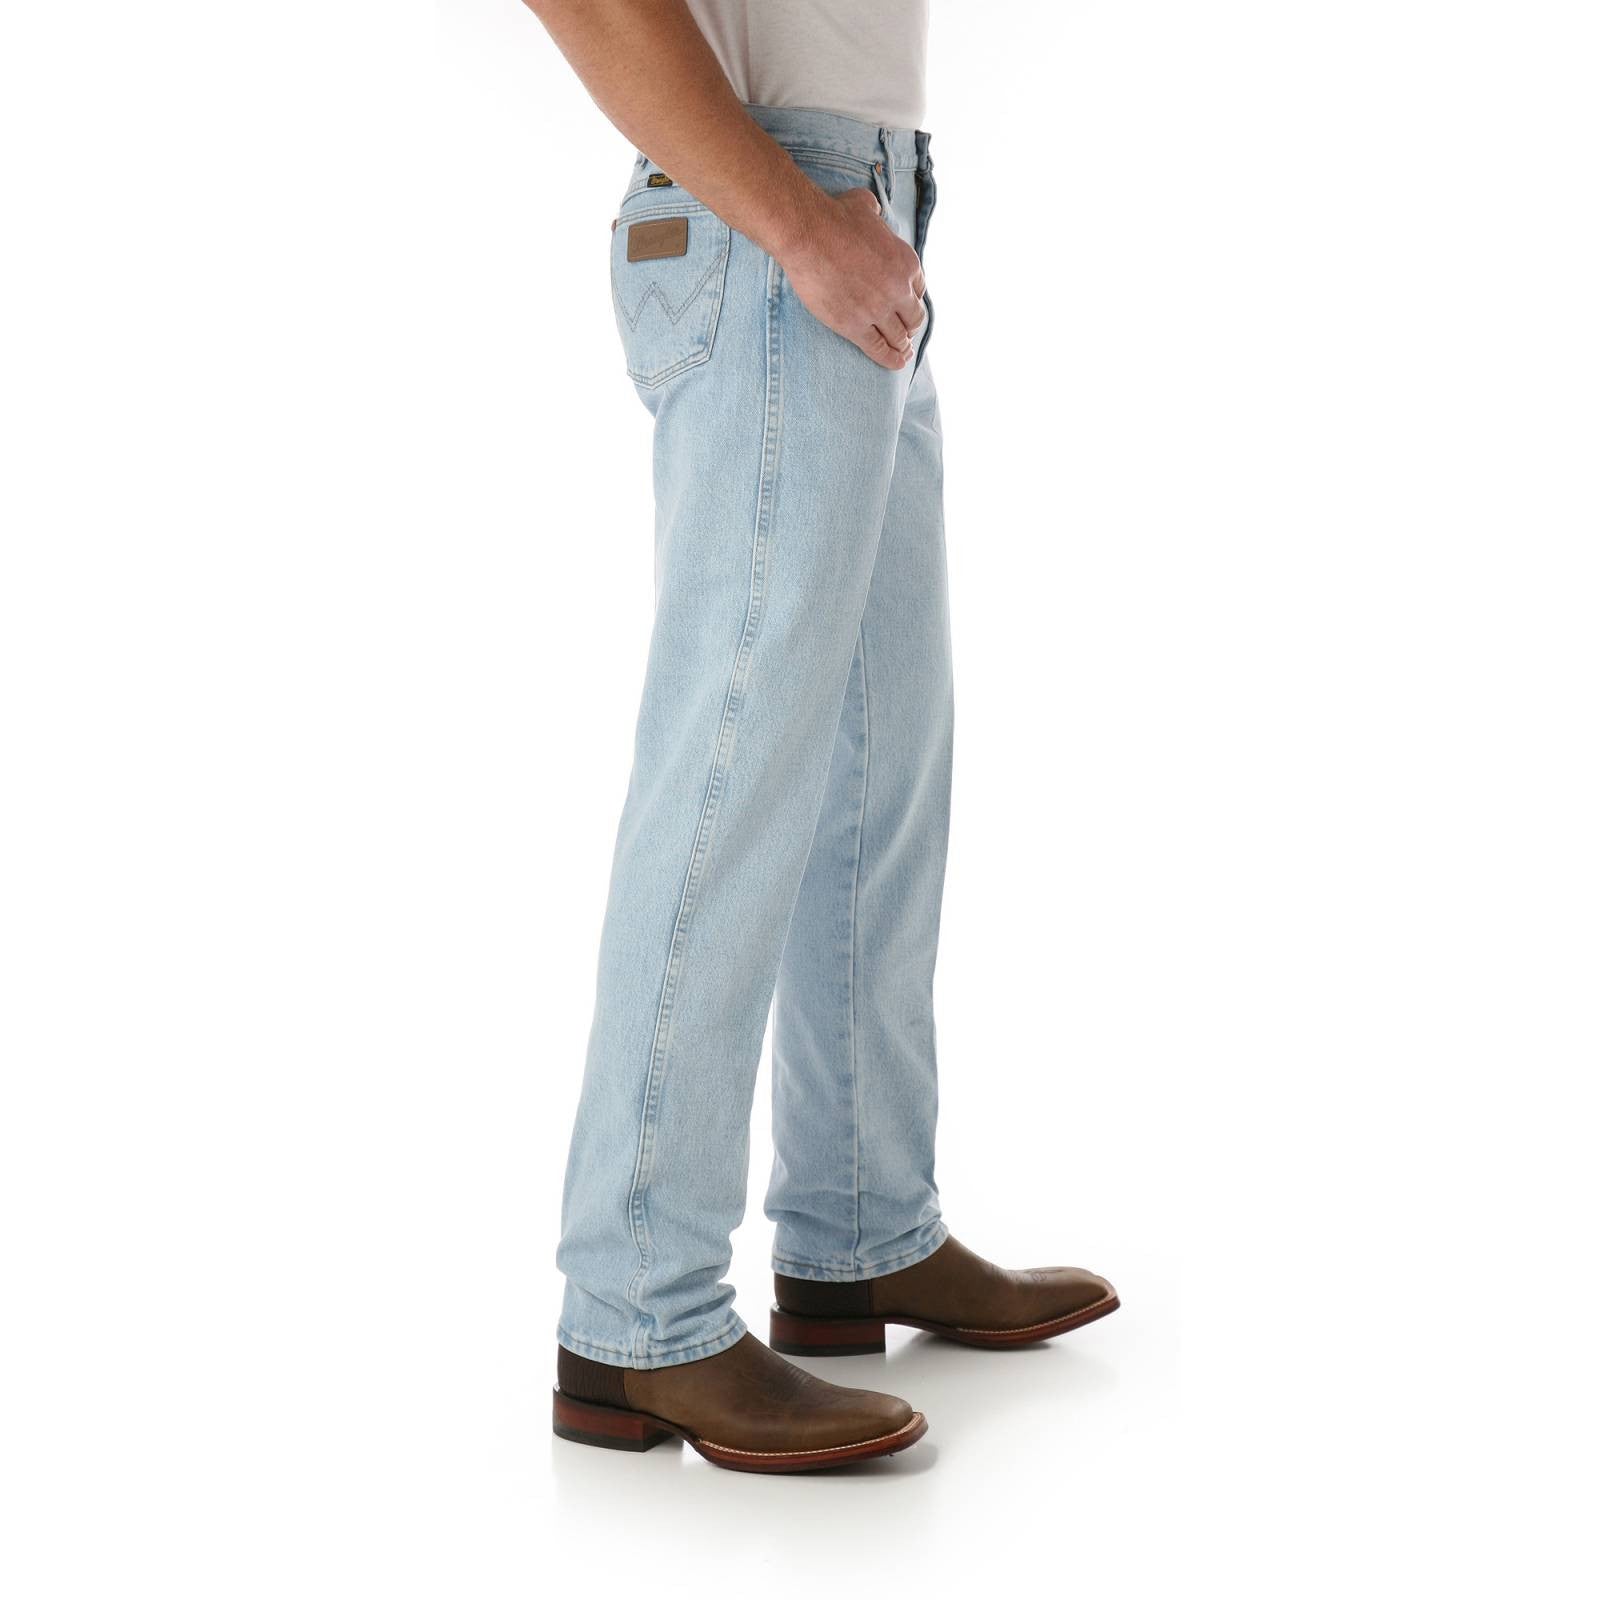 Wrangler Cowboy Cut Original Fit Jean (Bleach) – Frontier Western Store